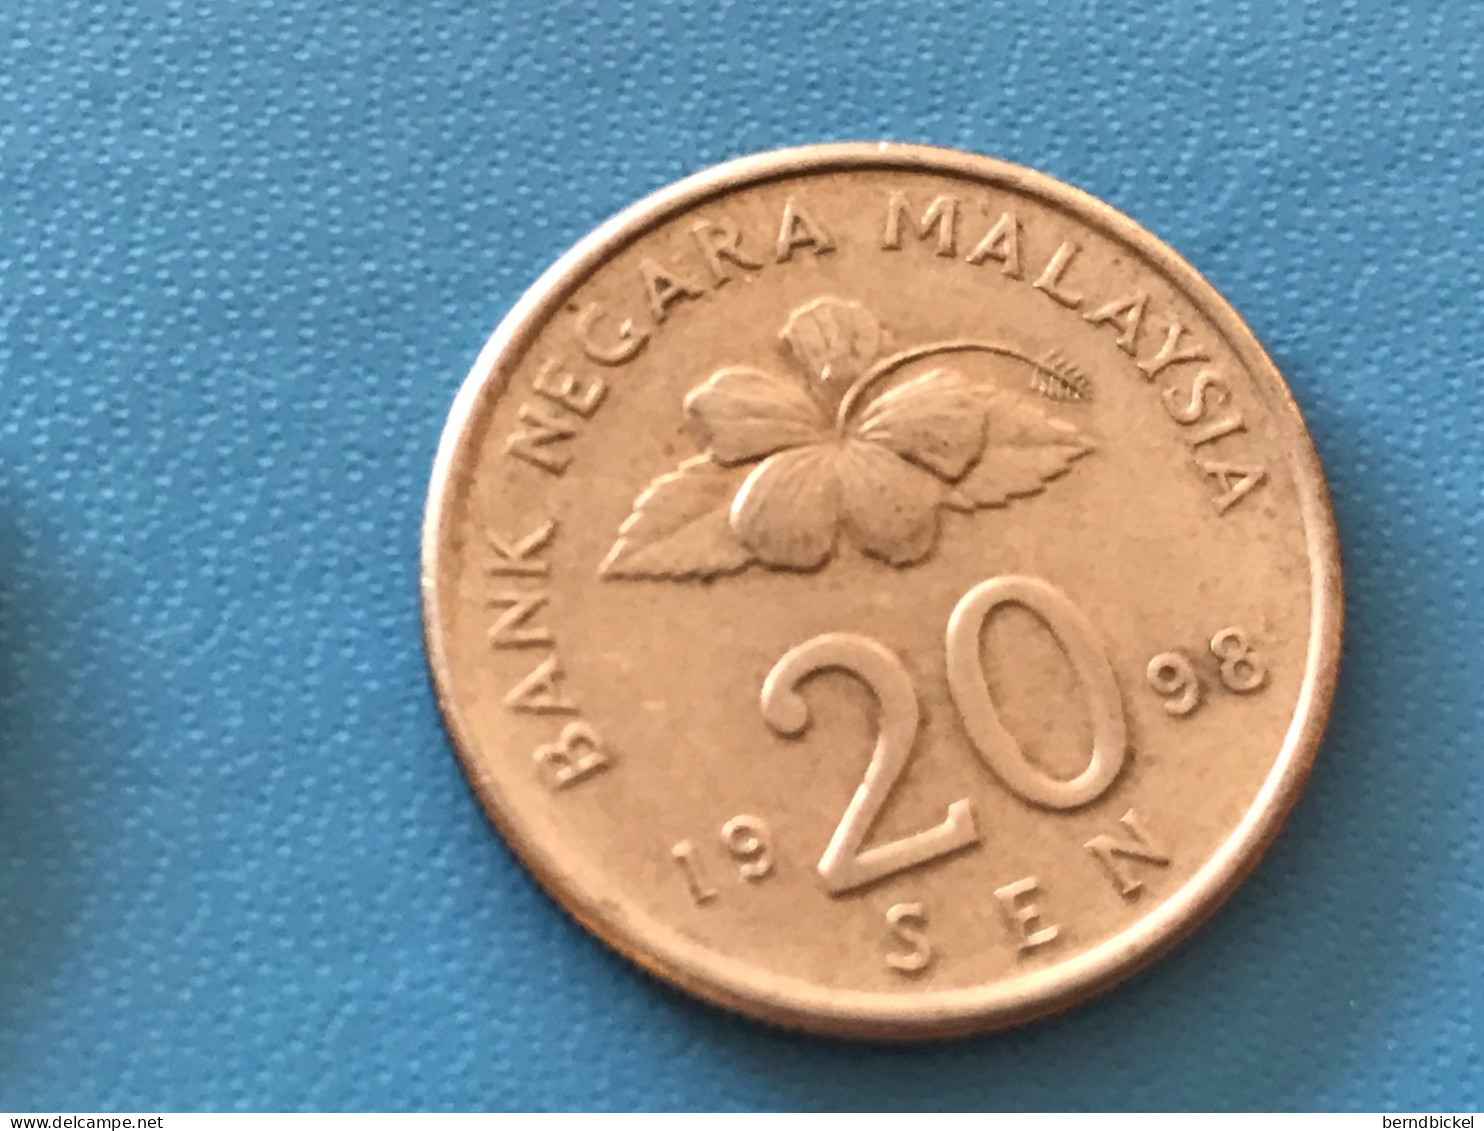 Münze Münzen Umlaufmünze Malaysia 20 Sen 1998 - Malesia